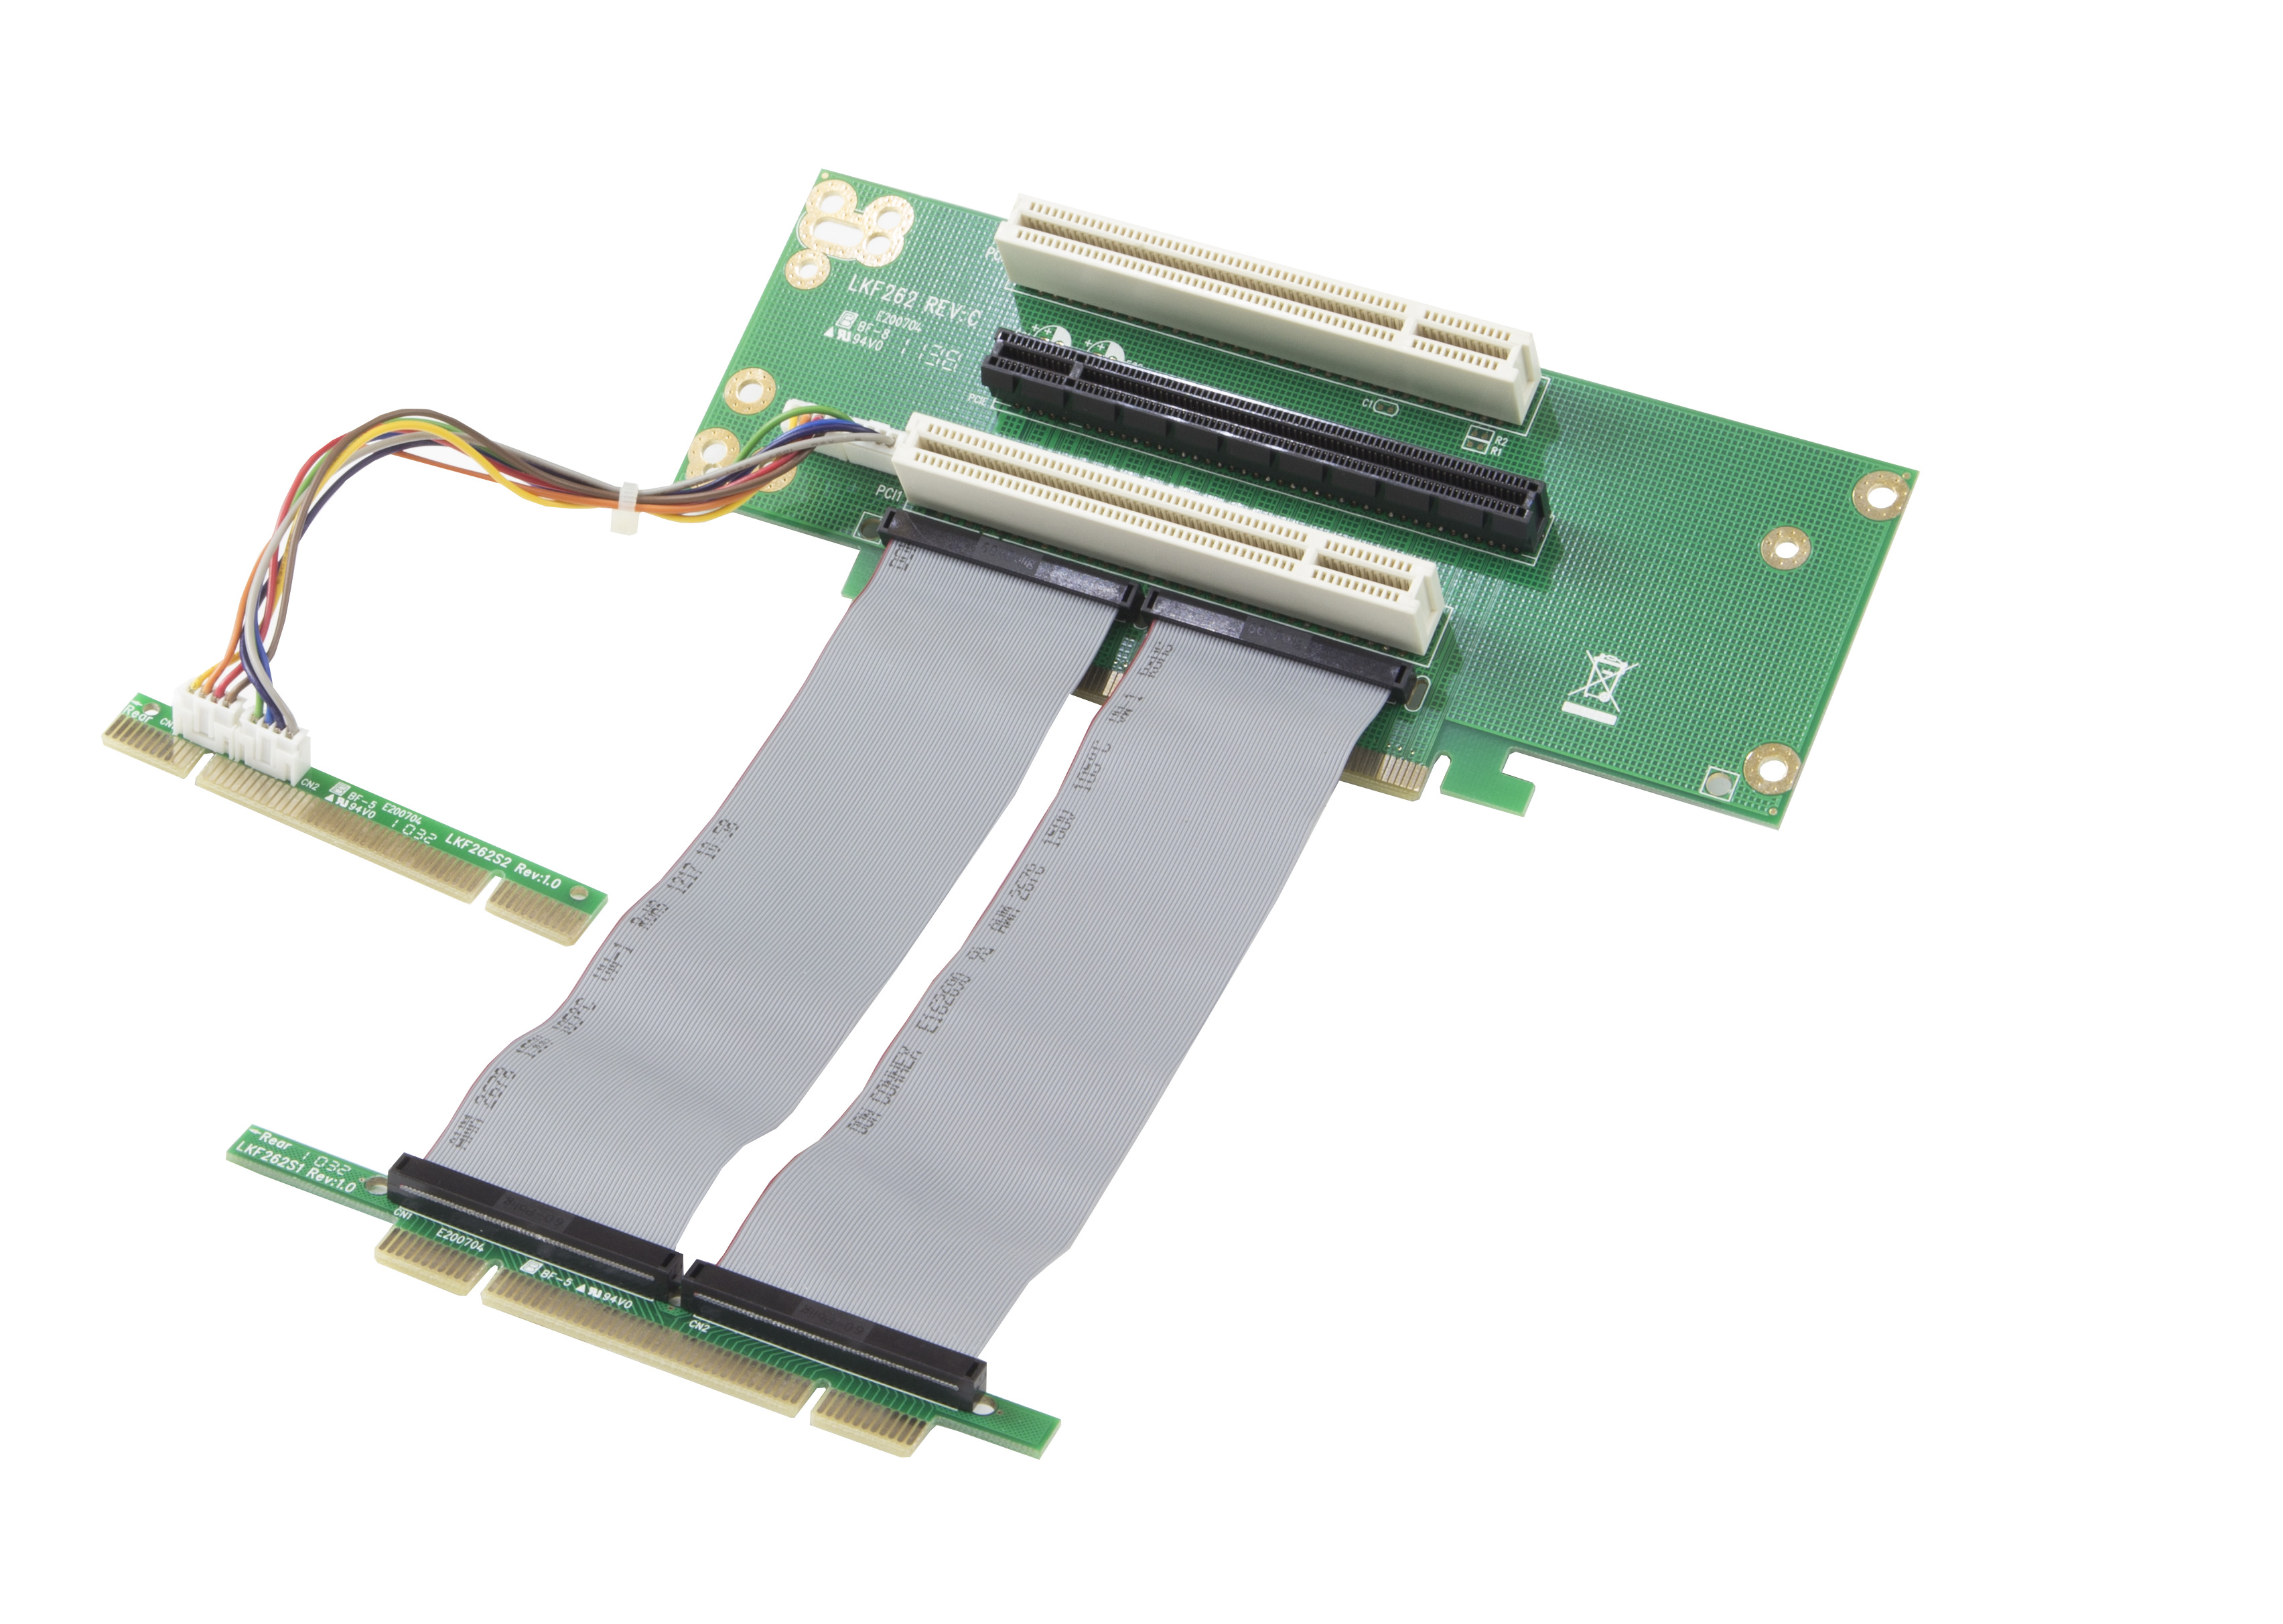 PCIe+Dual PCI Riser Card  |Products|Accessories|PCI Riser Card